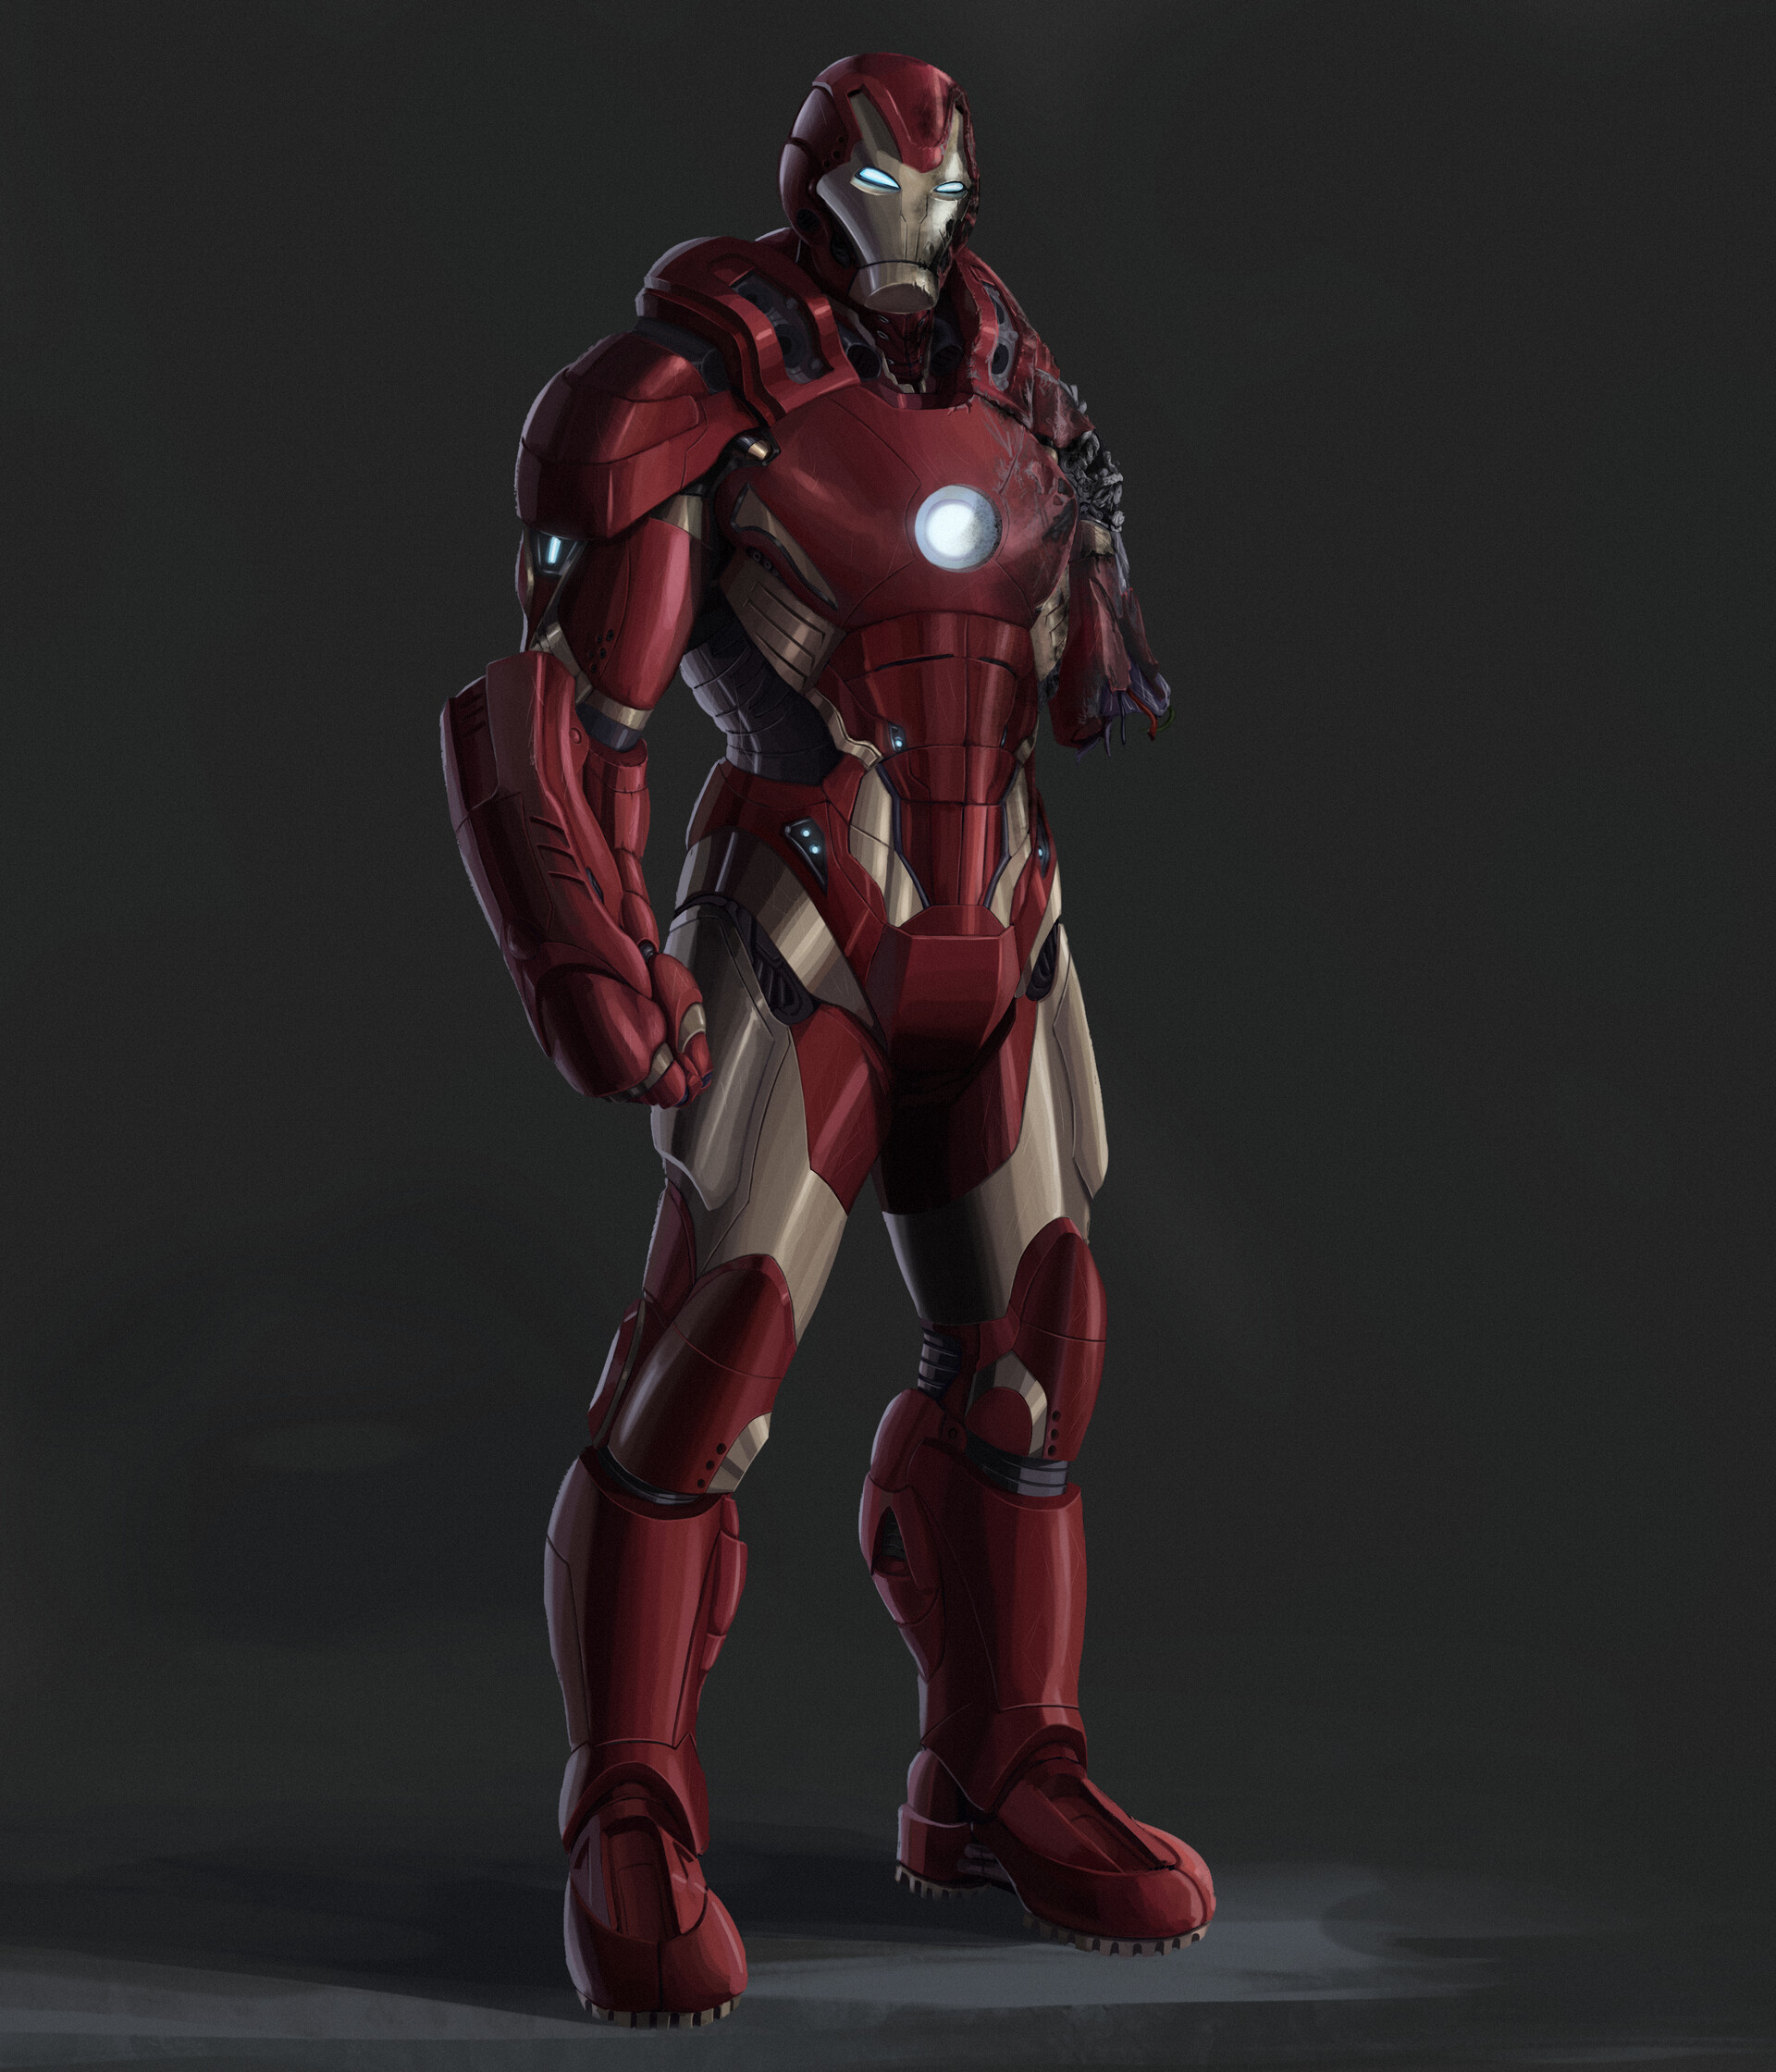 ArtStation - Battle damaged Iron man